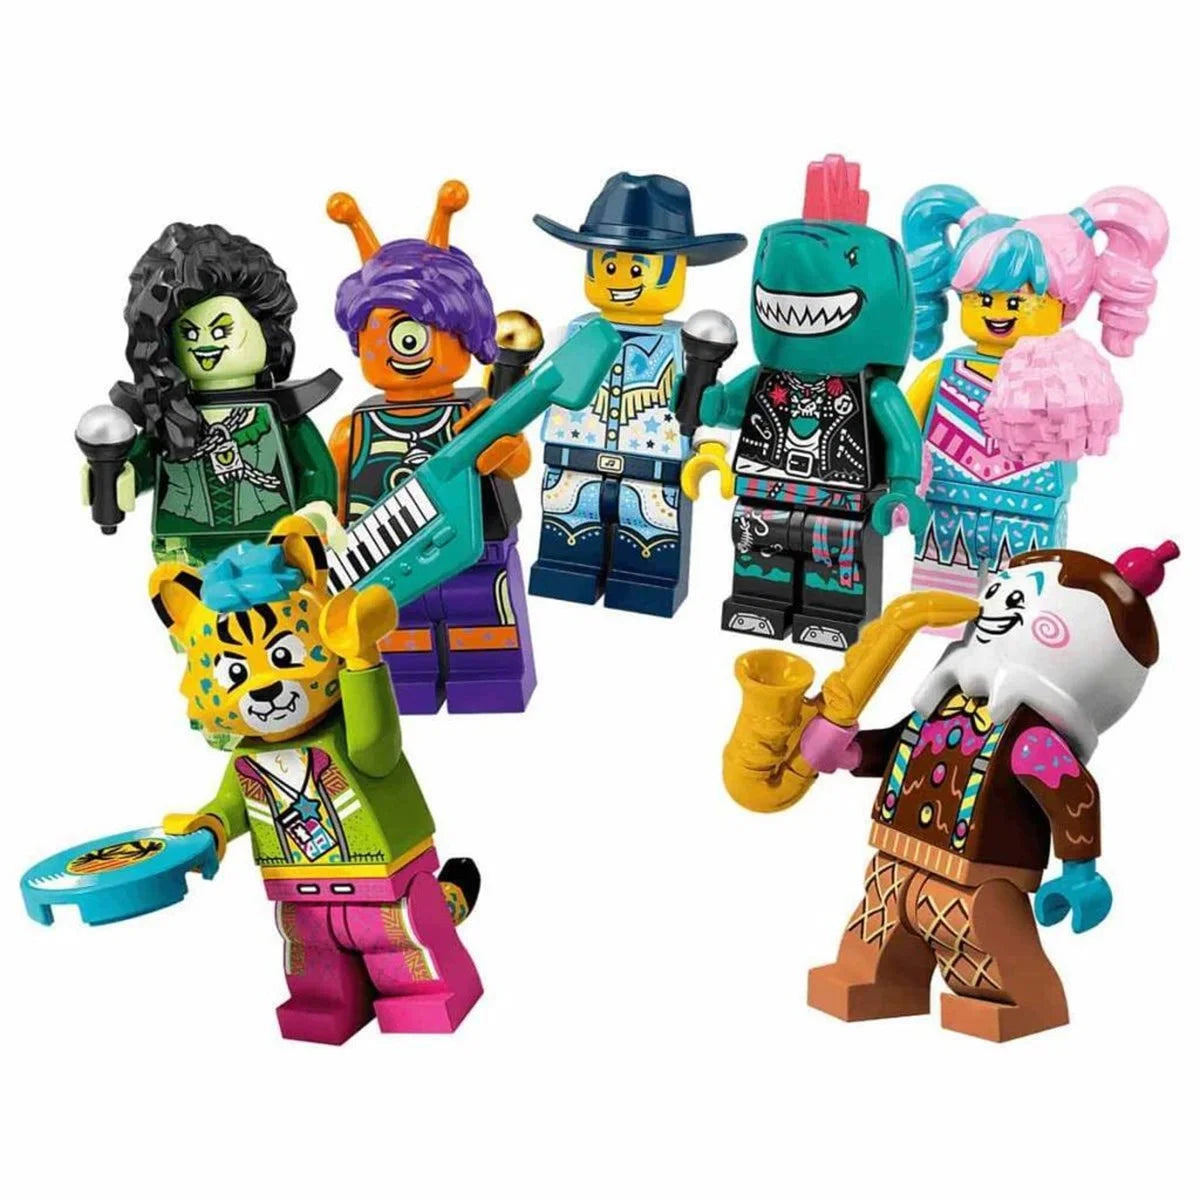 Lego Vidiyo Bandmates BeatBox 43101 | Toysall